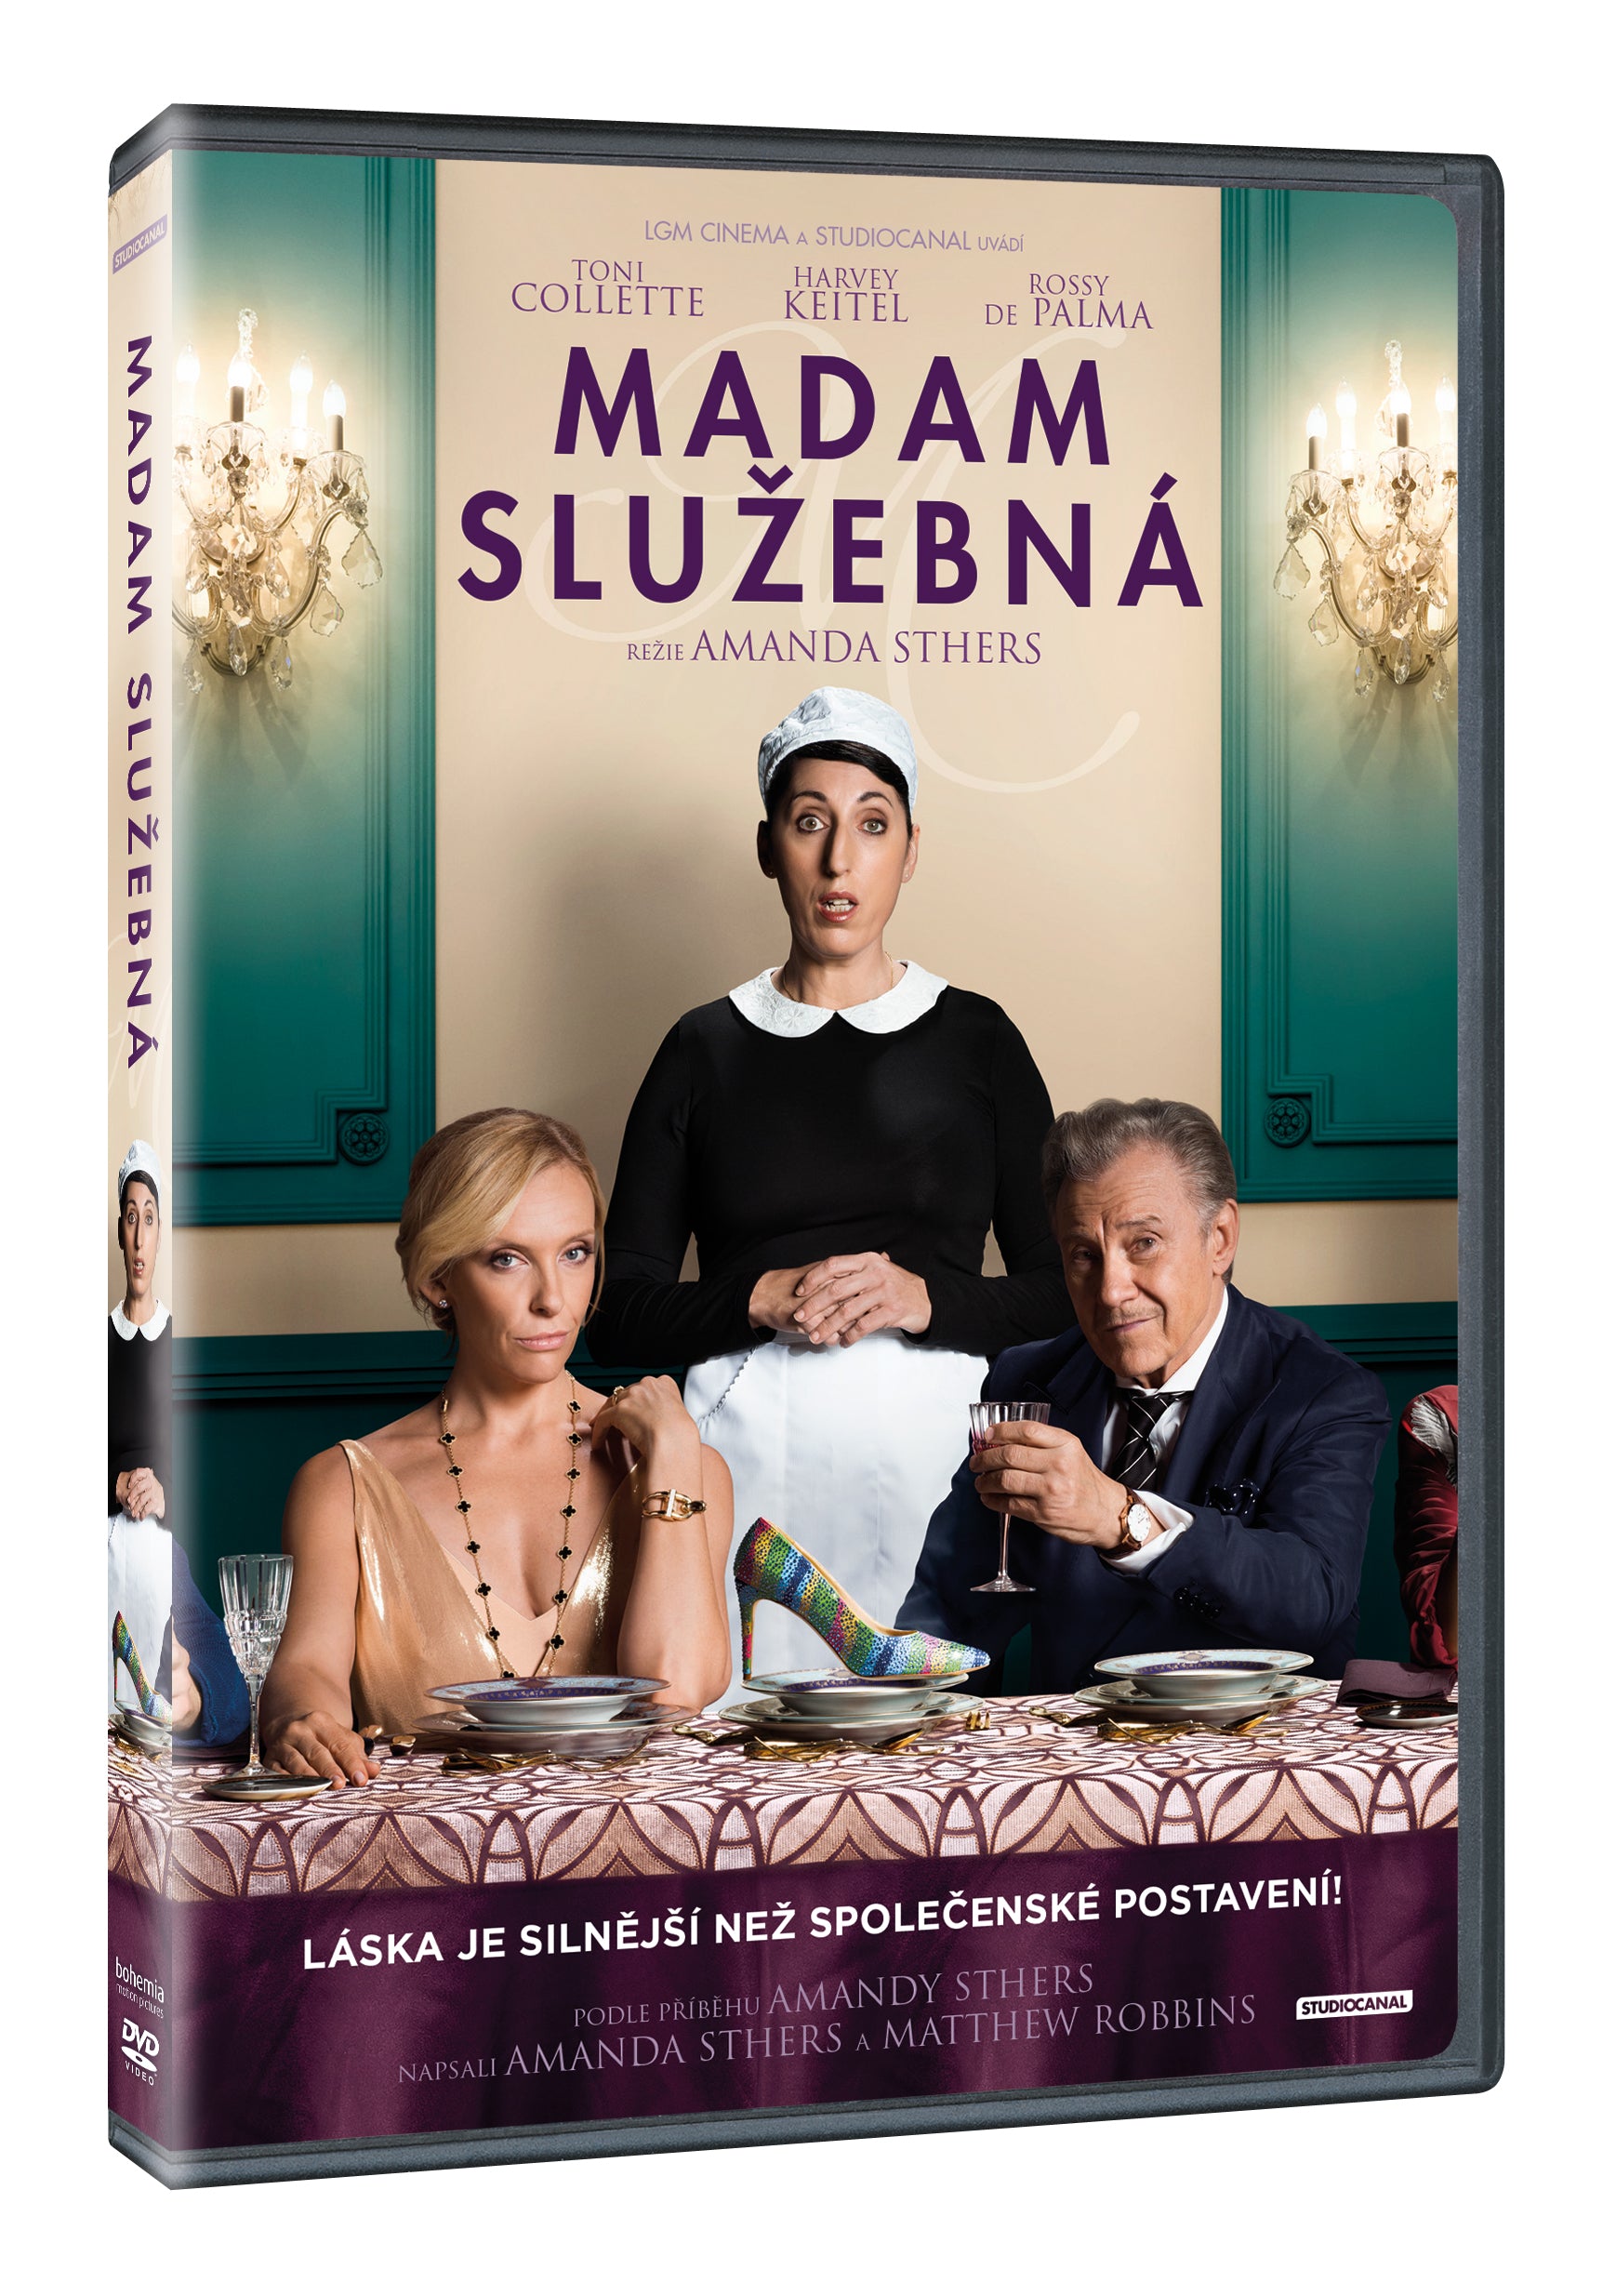 Madam sluzebna DVD / Madame